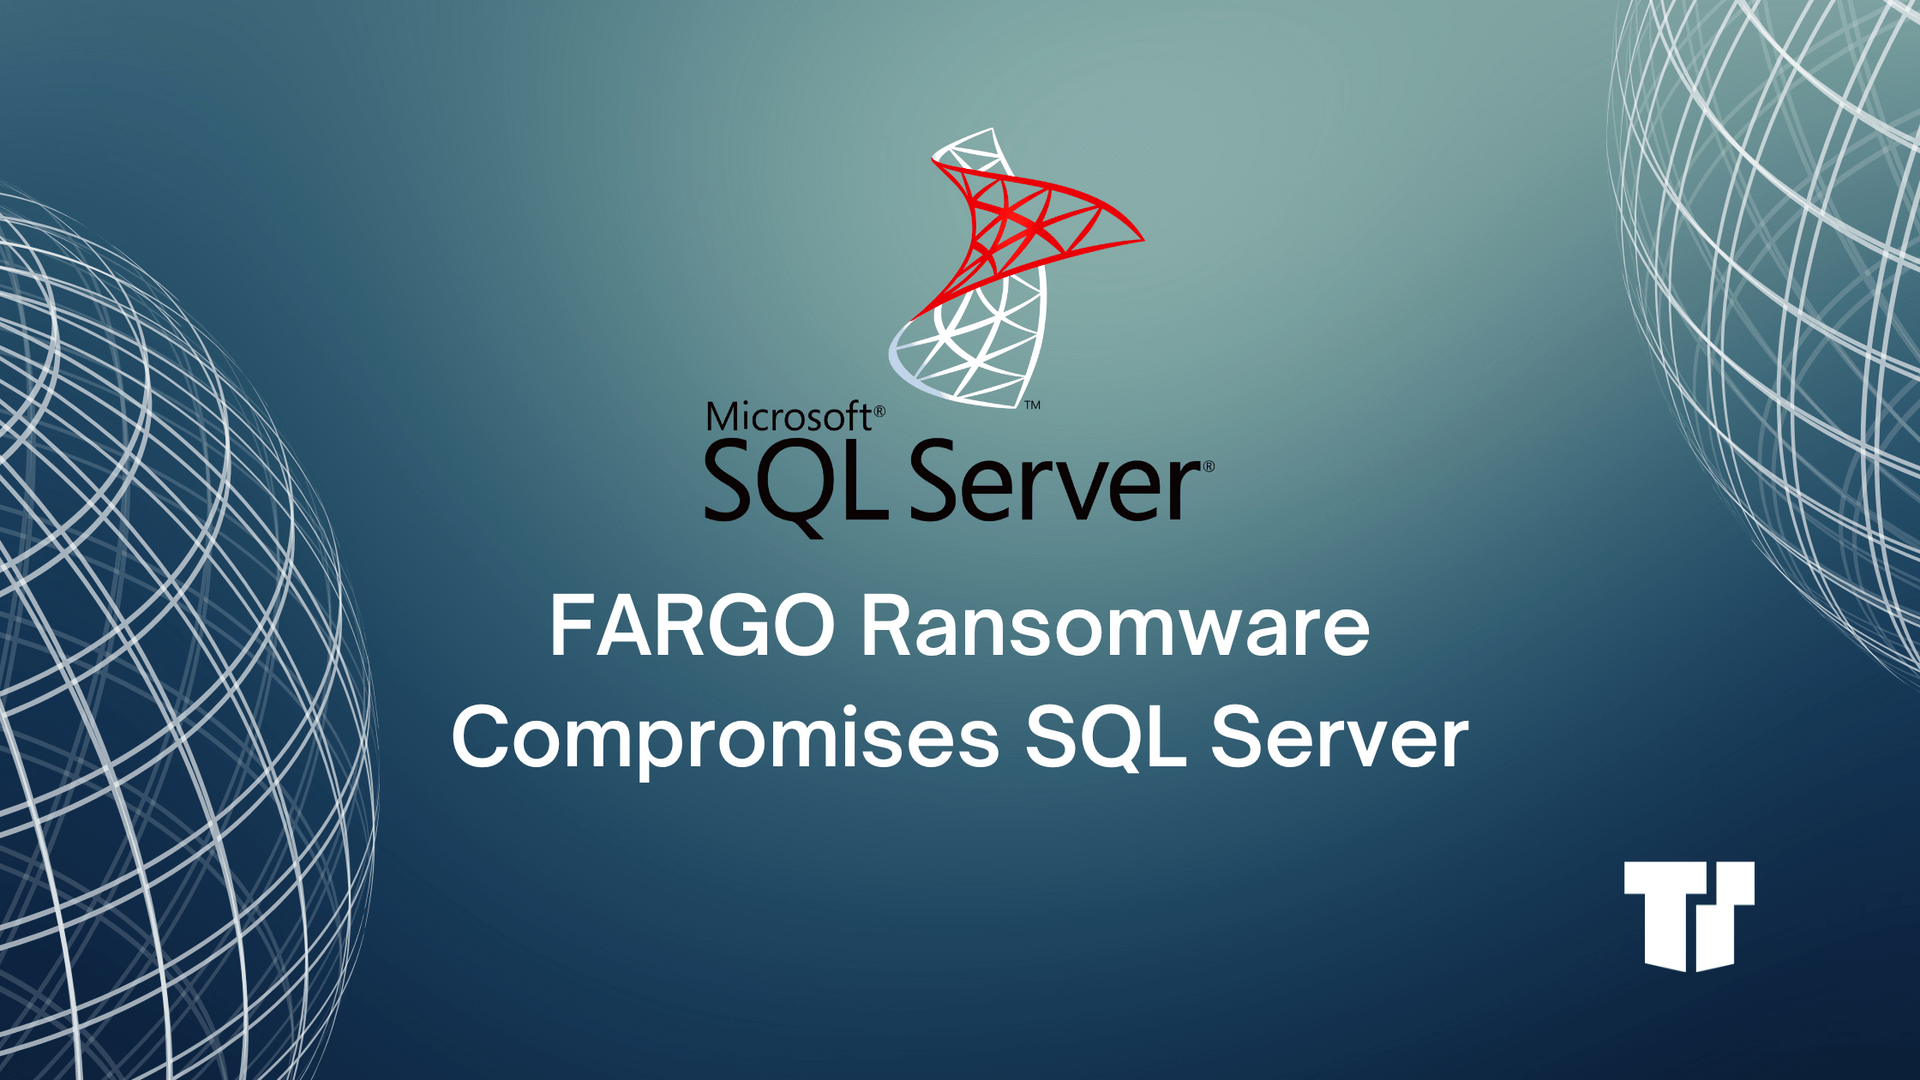 New SQL Server Attack via FARGO Ransomware – Vulnerable Systems Require Attention cover image